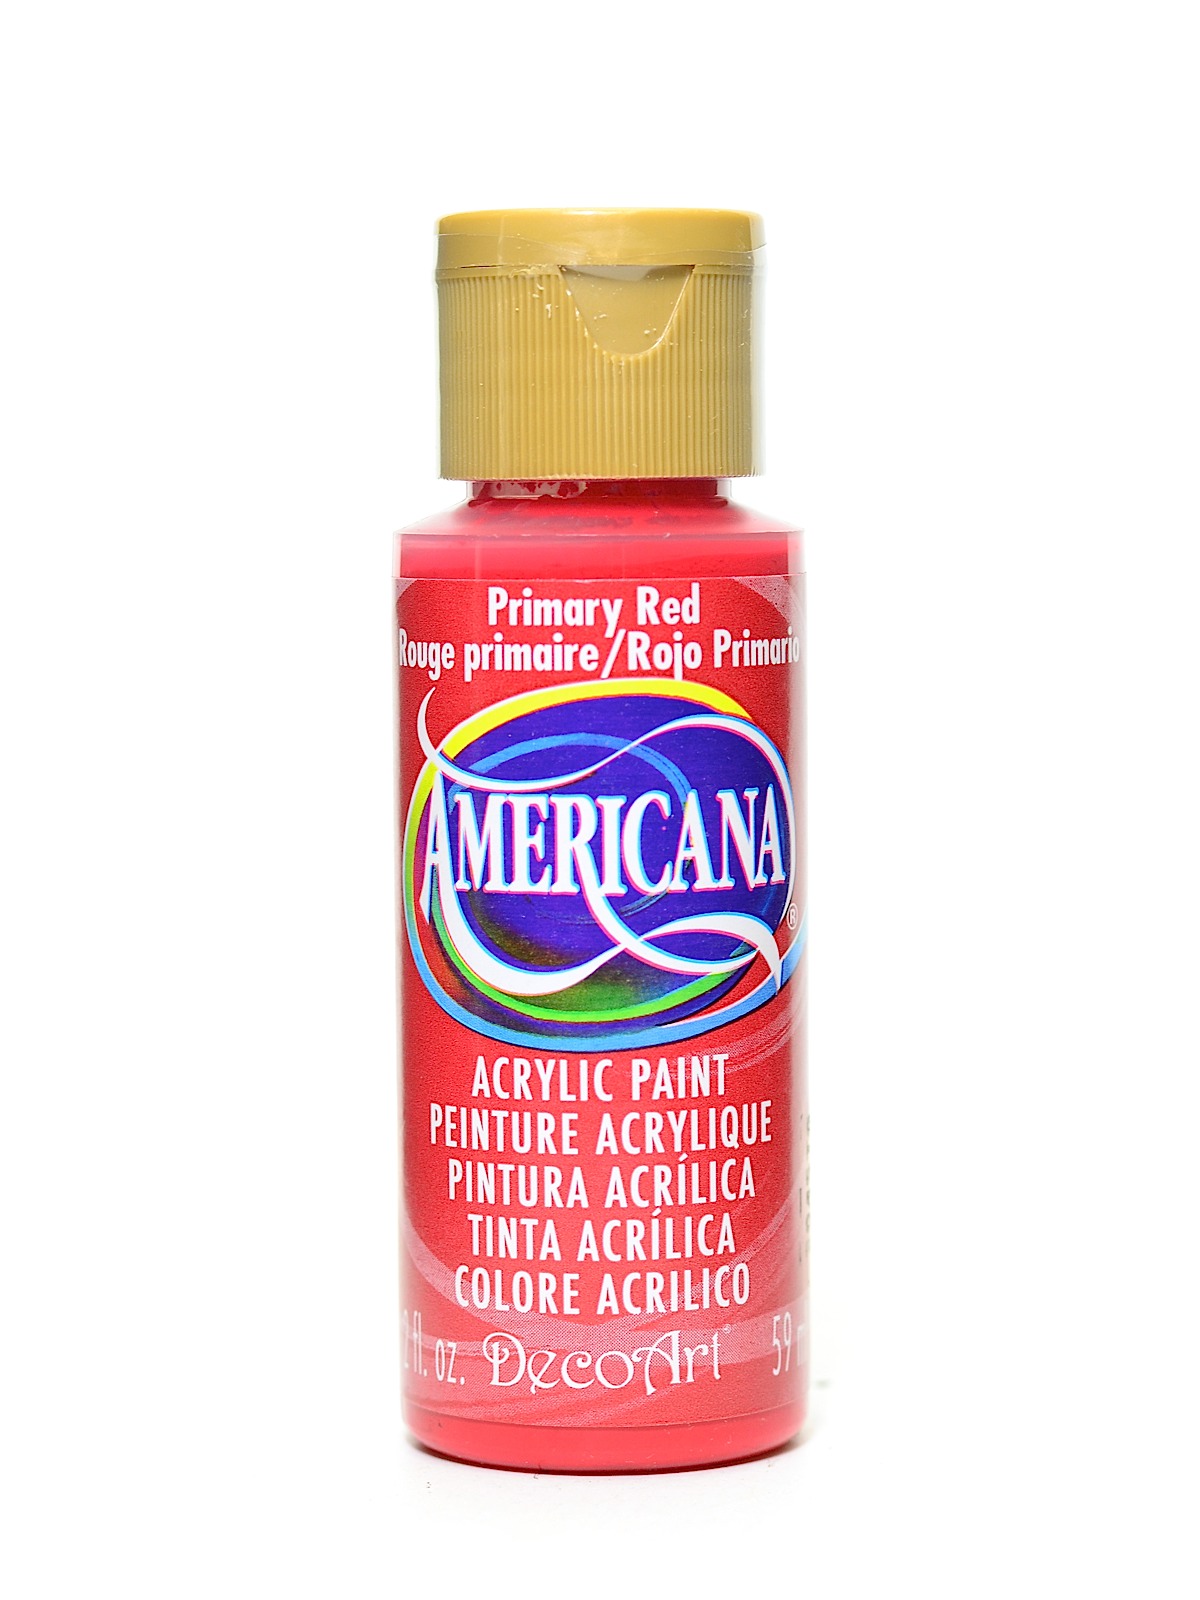 Americana Acrylic Paints primary red 2 oz.